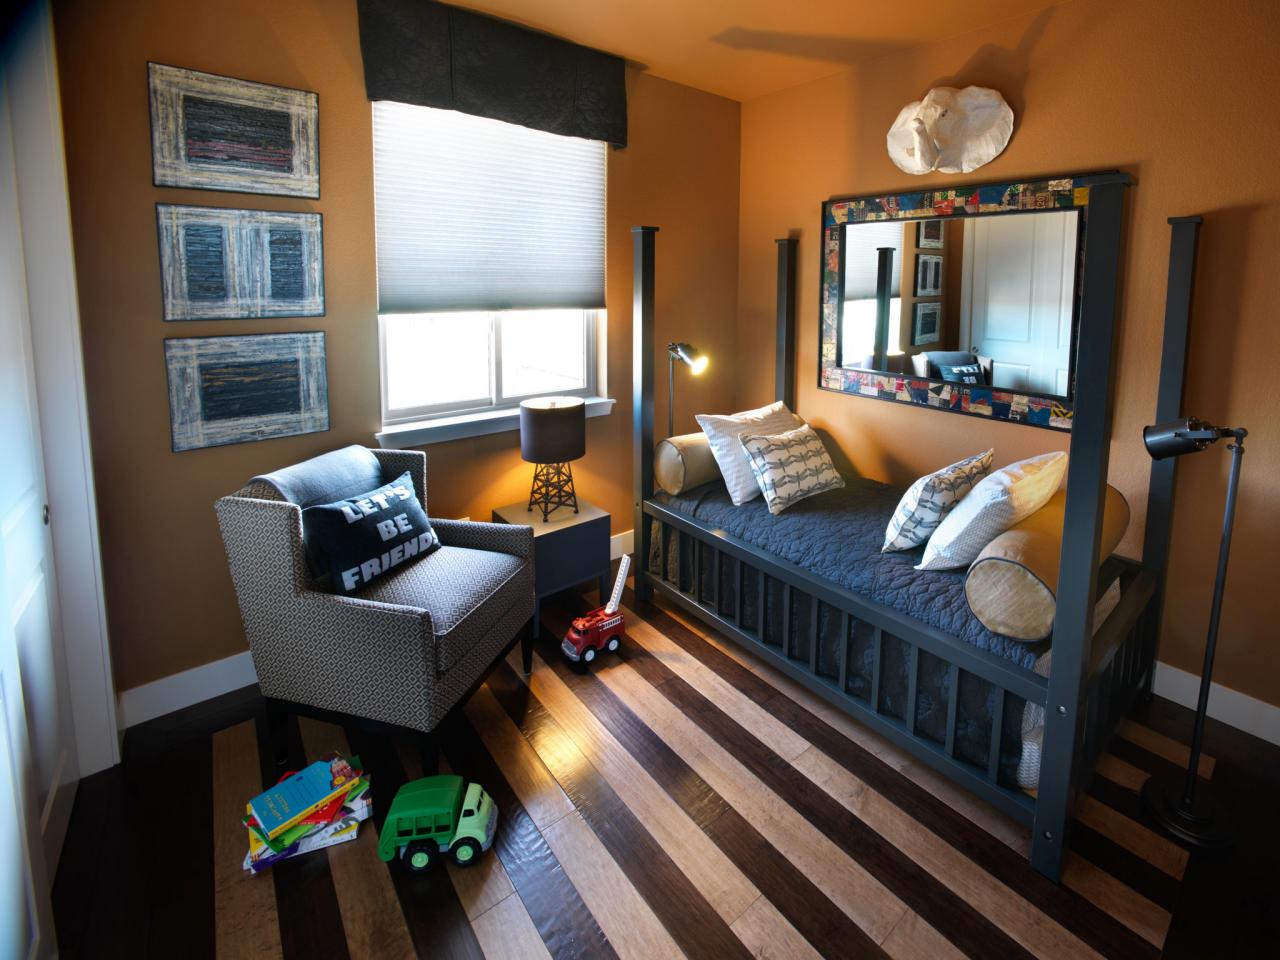 Kids' Bedroom Flooring: Pictures, Options & Ideas | HGTV